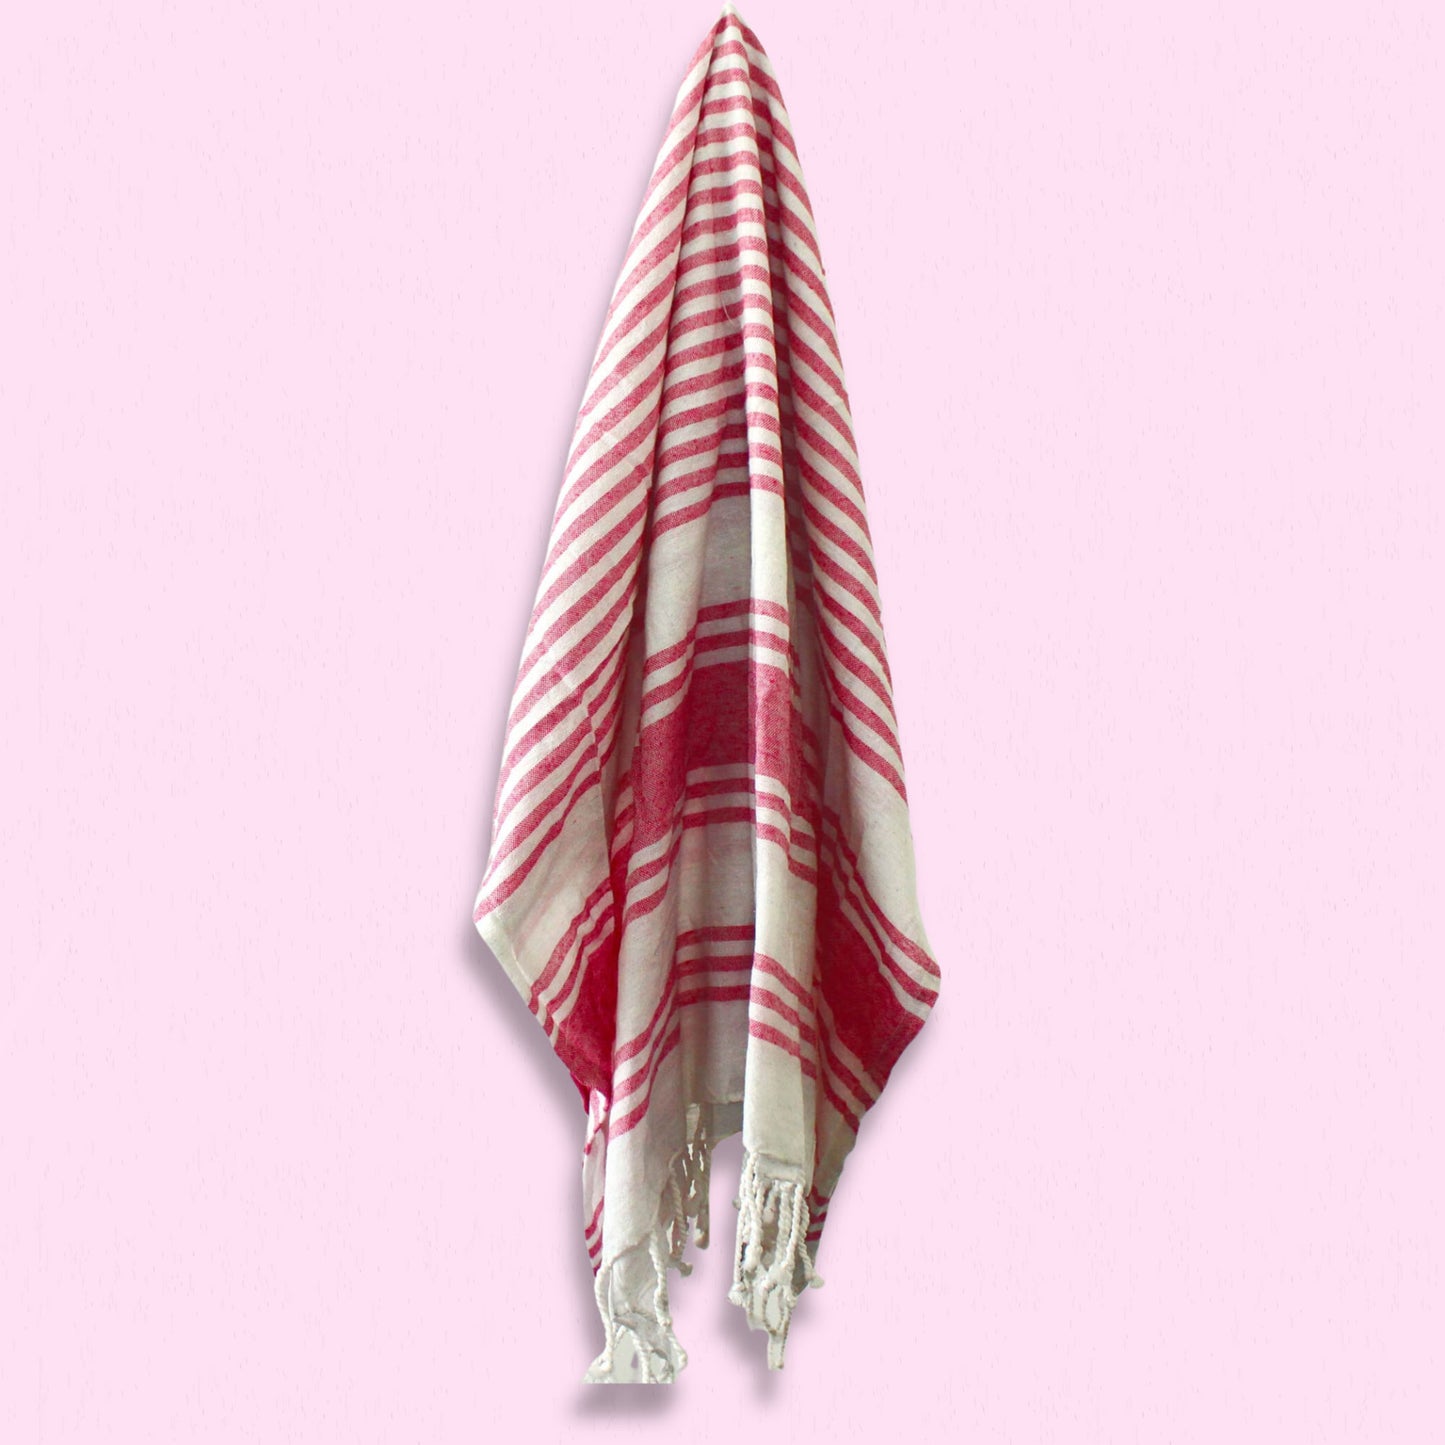 Hamman Spa Towel - Sunset Pink - 90x170cm